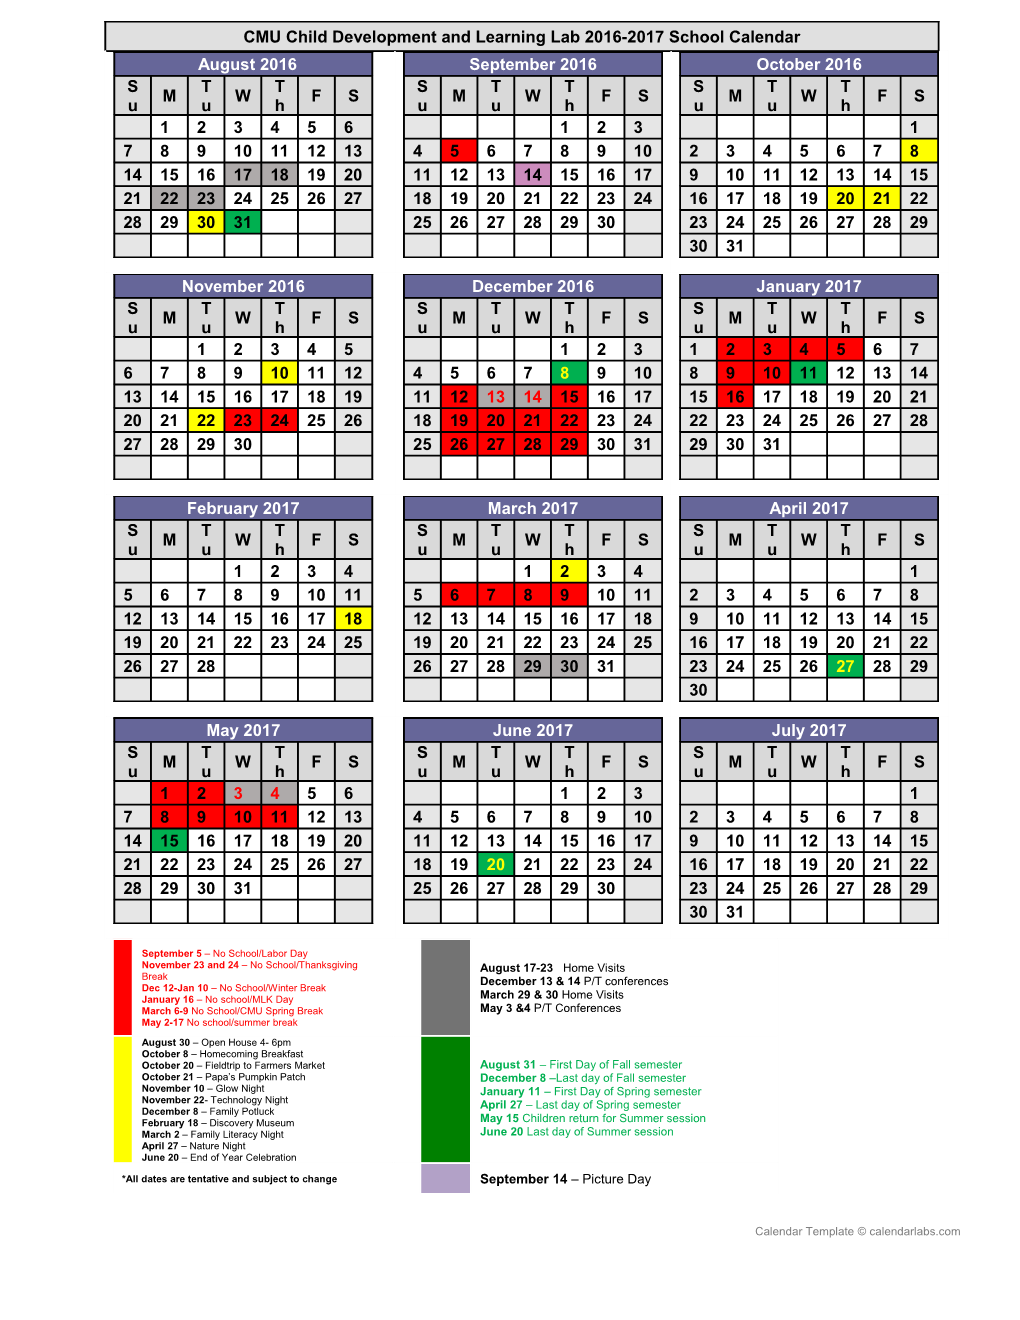 2016-17 School Calendar - Calendarlabs.Com s3